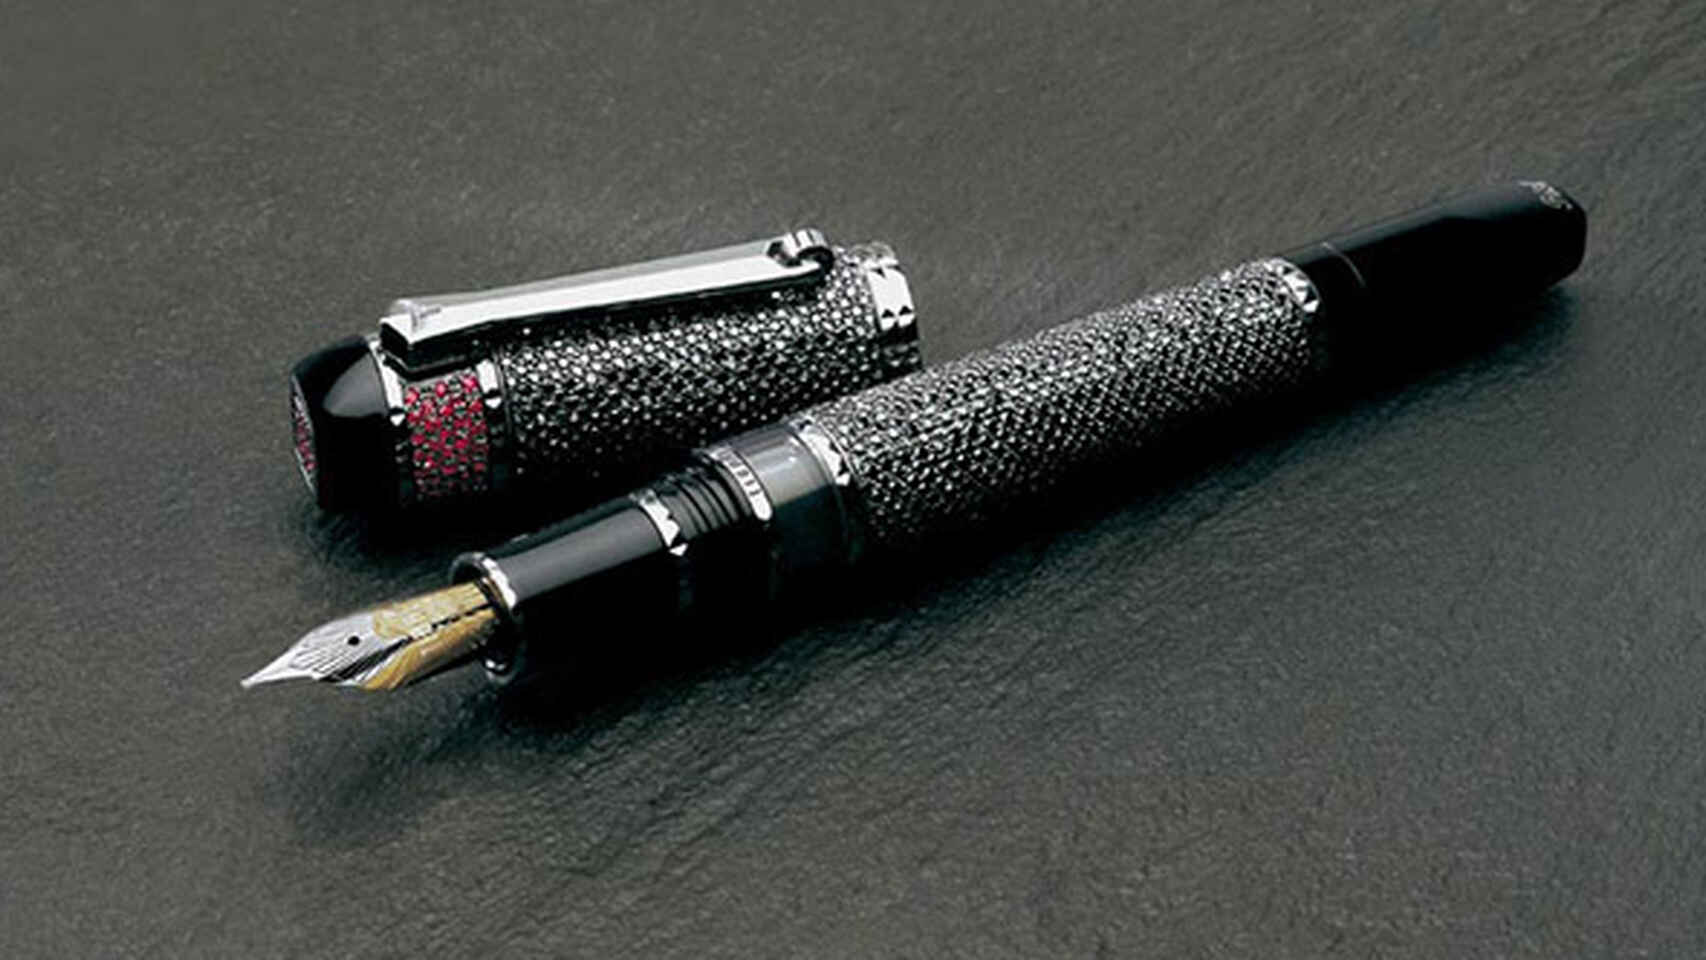 Most Expensive Pens - Fulgor Nocturnus by Tibaldi — $8 million